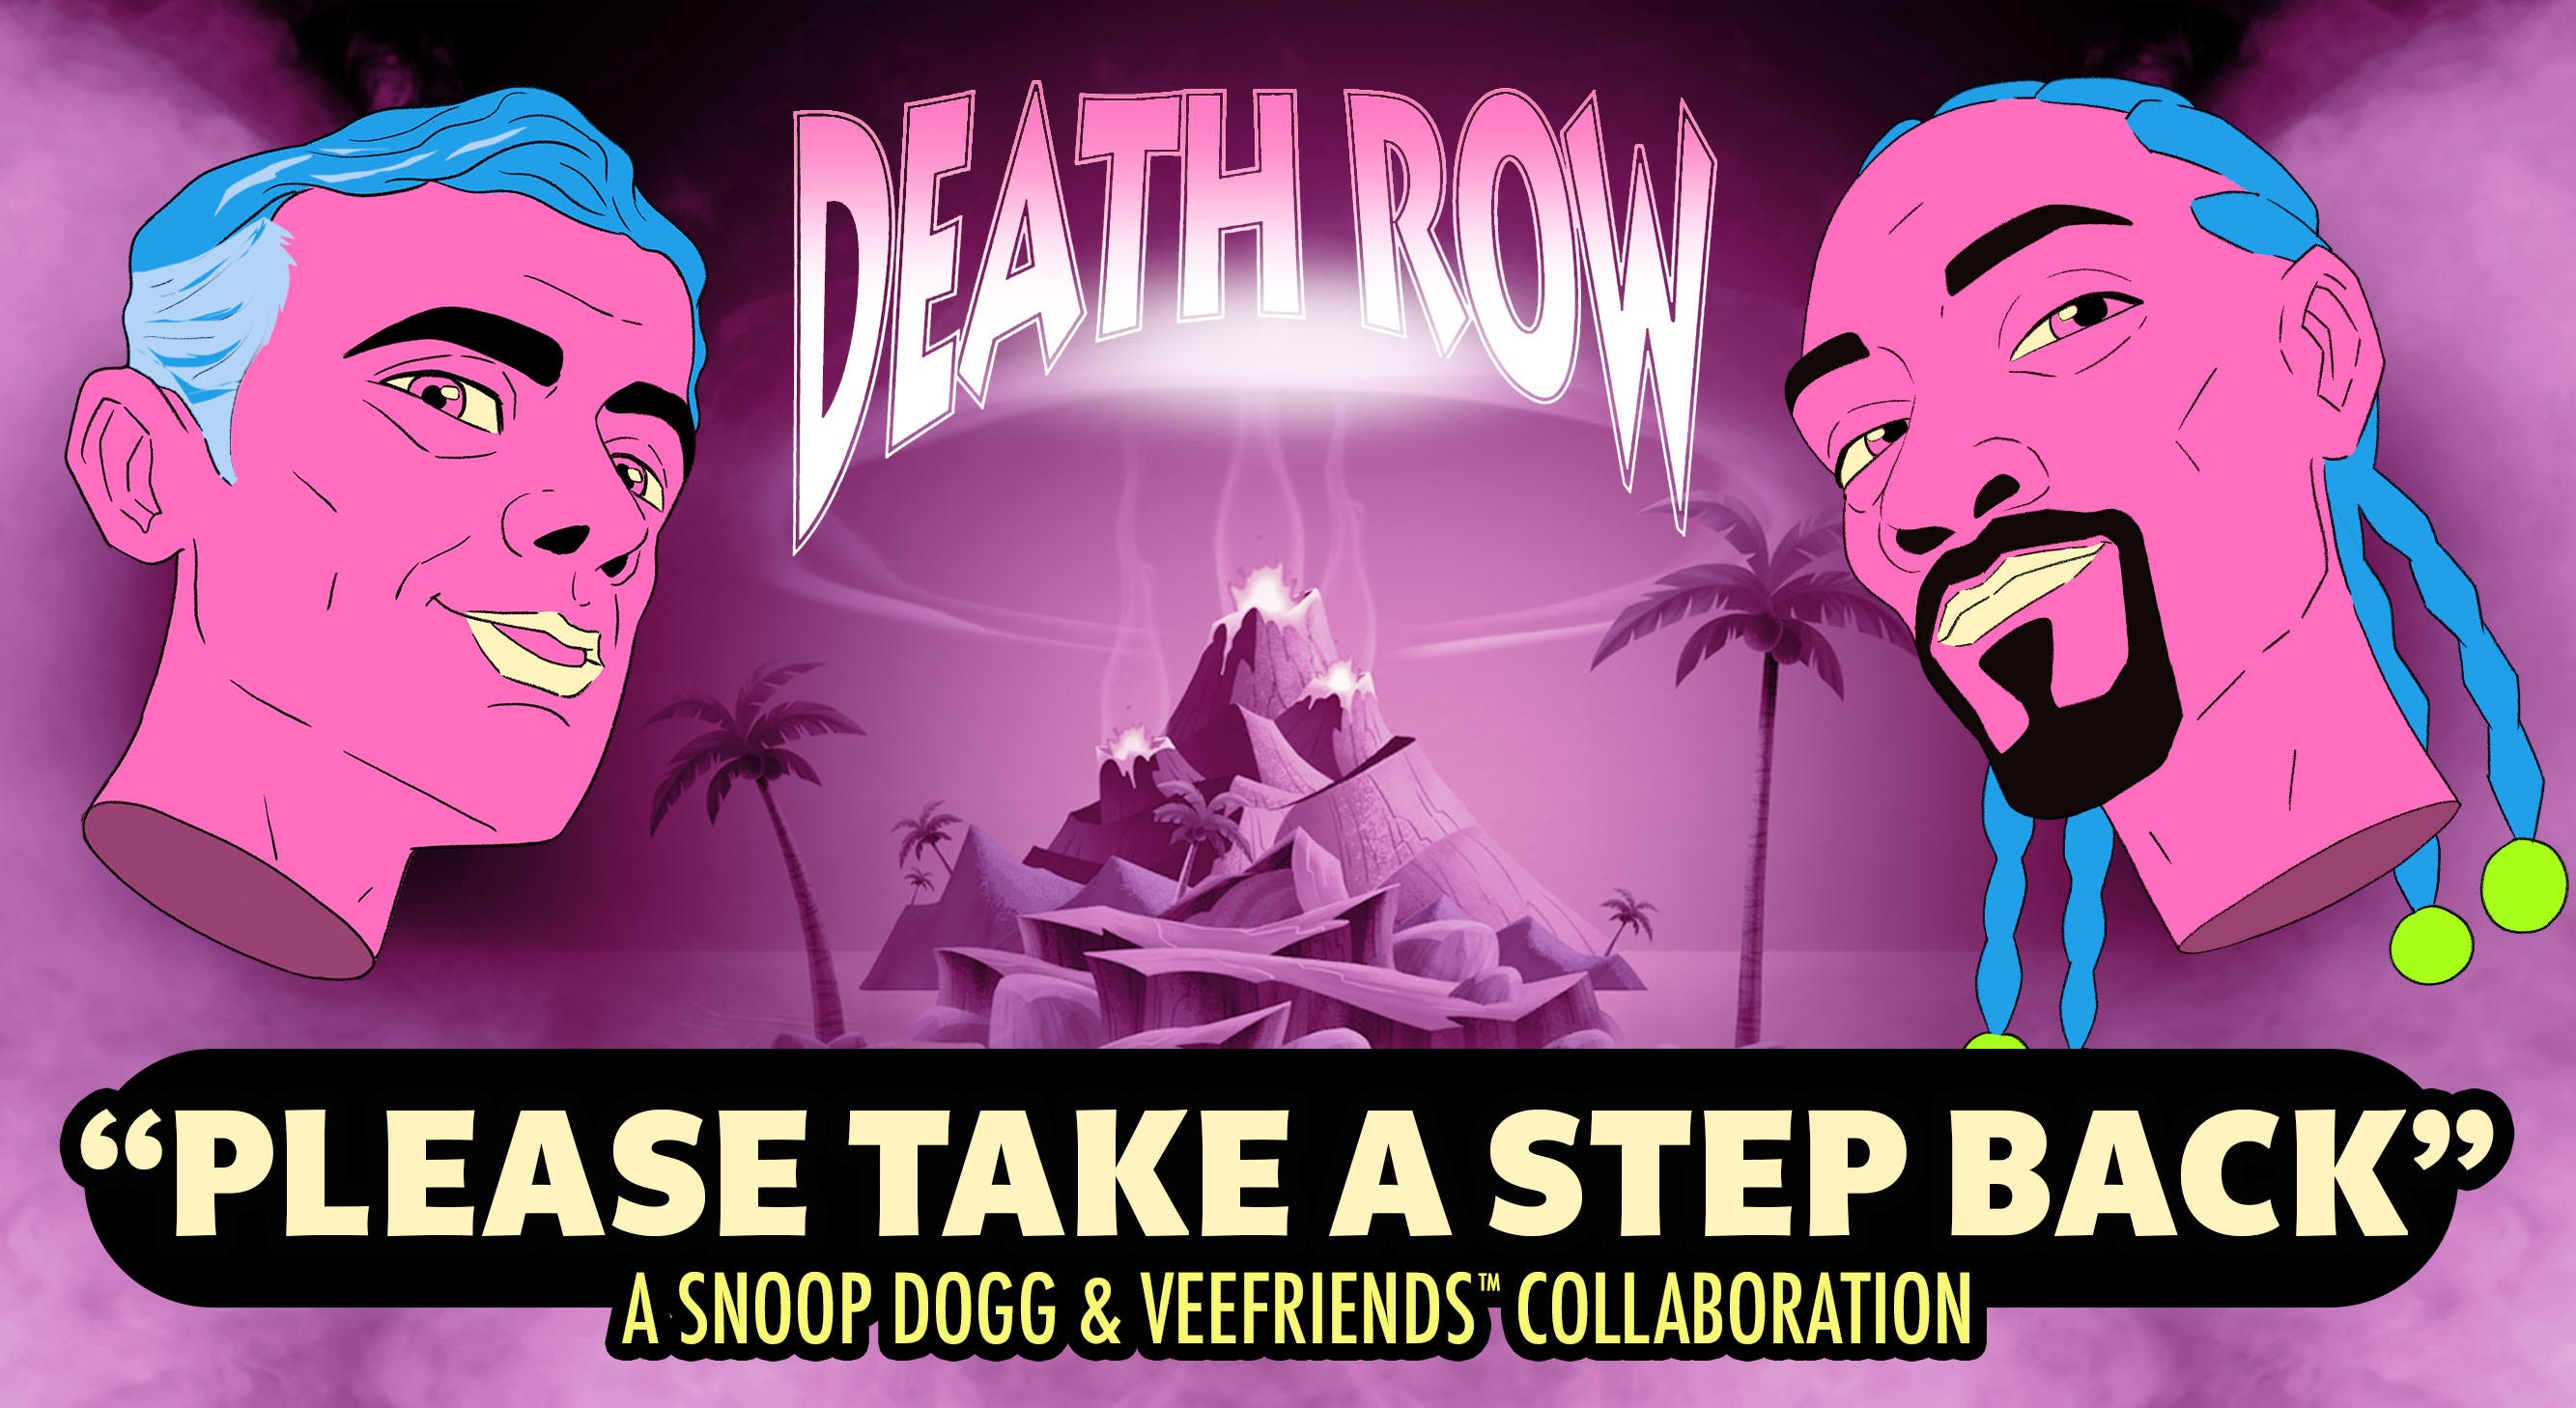 Aankondiging van "Please Take a Step Back" Snoop Dogg & VeeFriends' Collaborative NFT Collection en Song